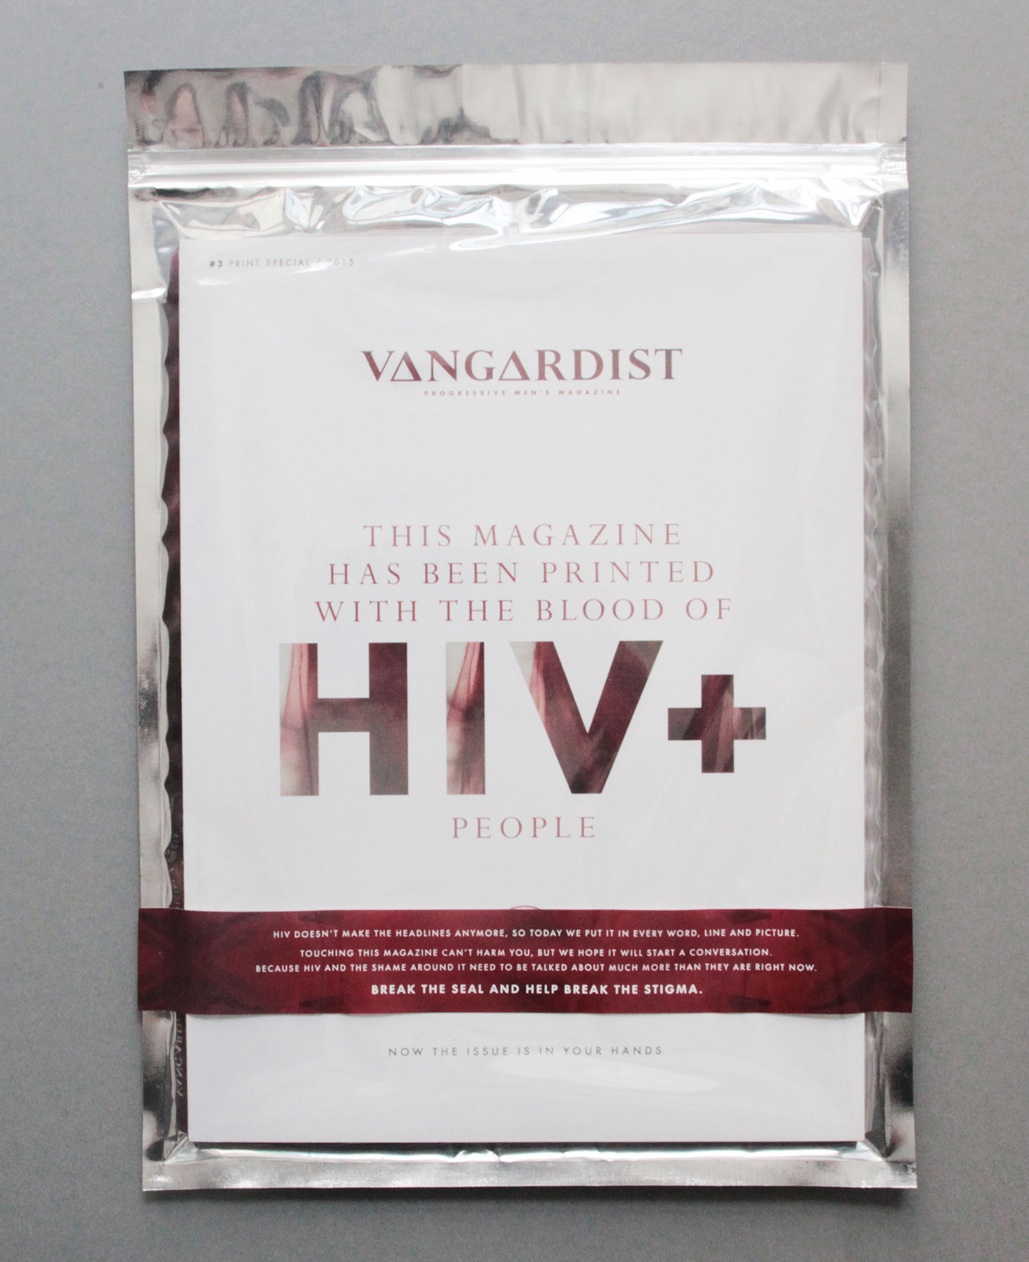 HIV+ blood magazine